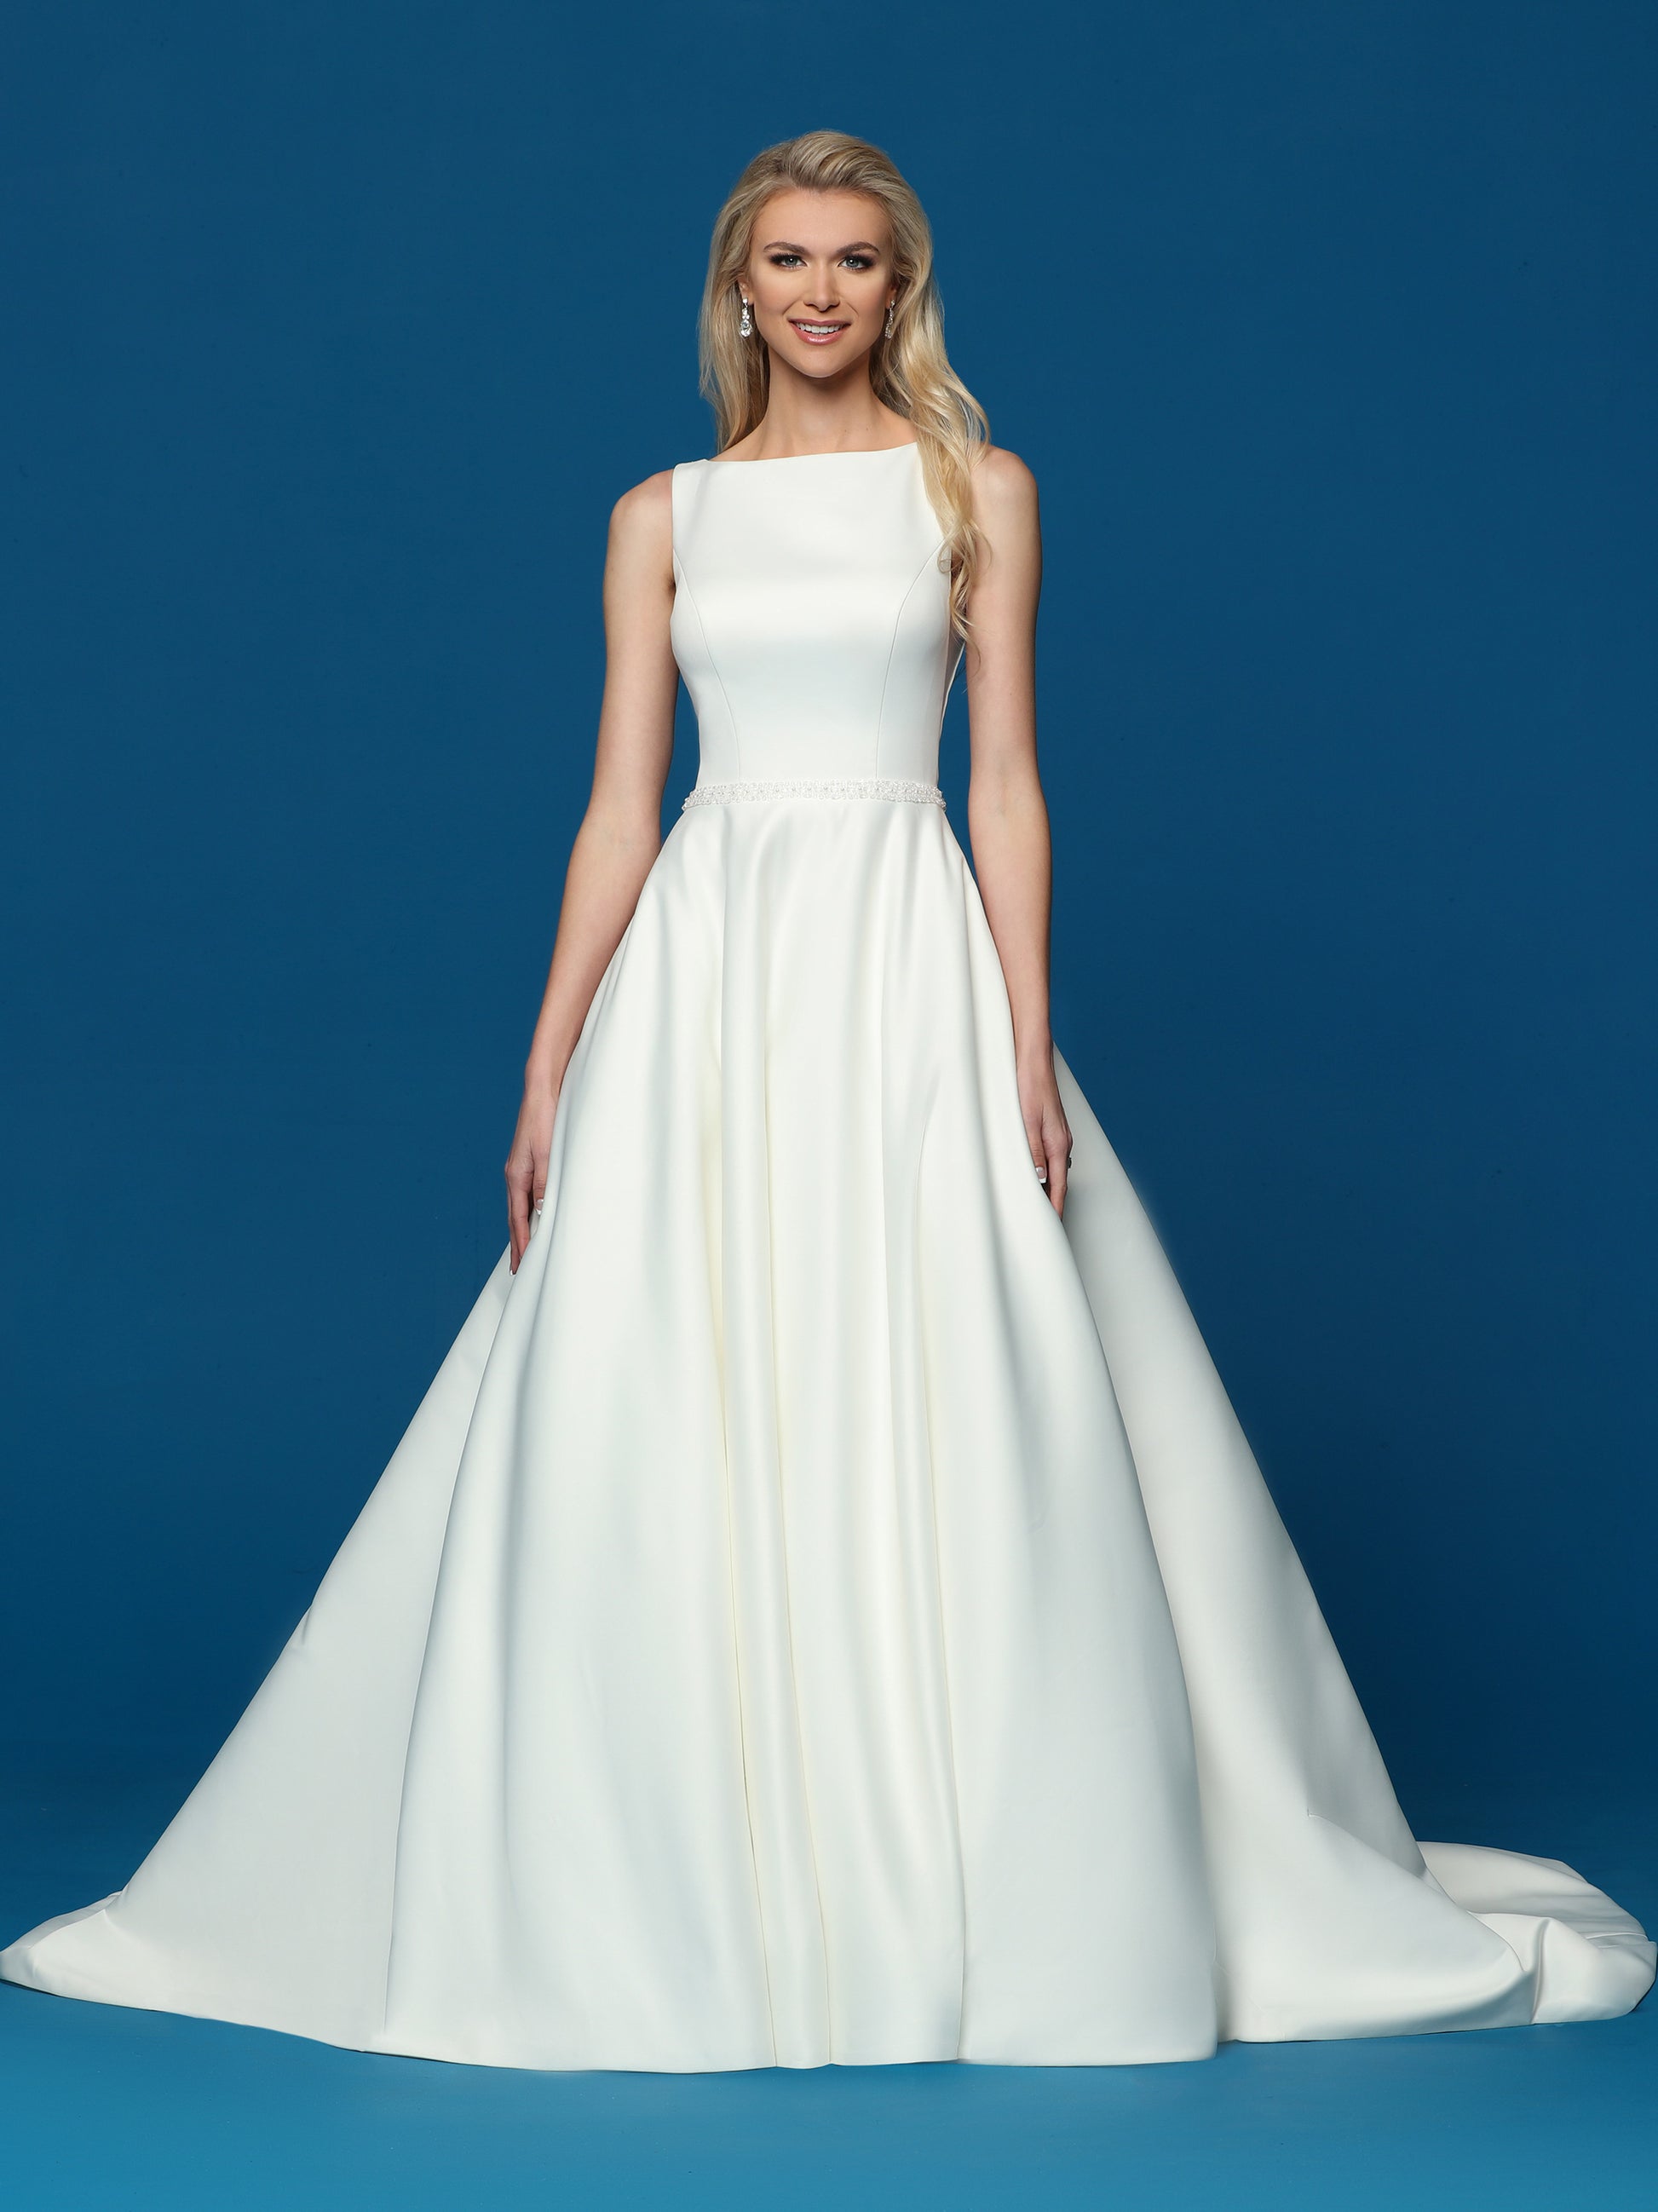 DaVinci Bridal 50768 A-Line Ballgown Floral Lace Deep V-Neck Open Back  Spaghetti Straps Wedding Gown